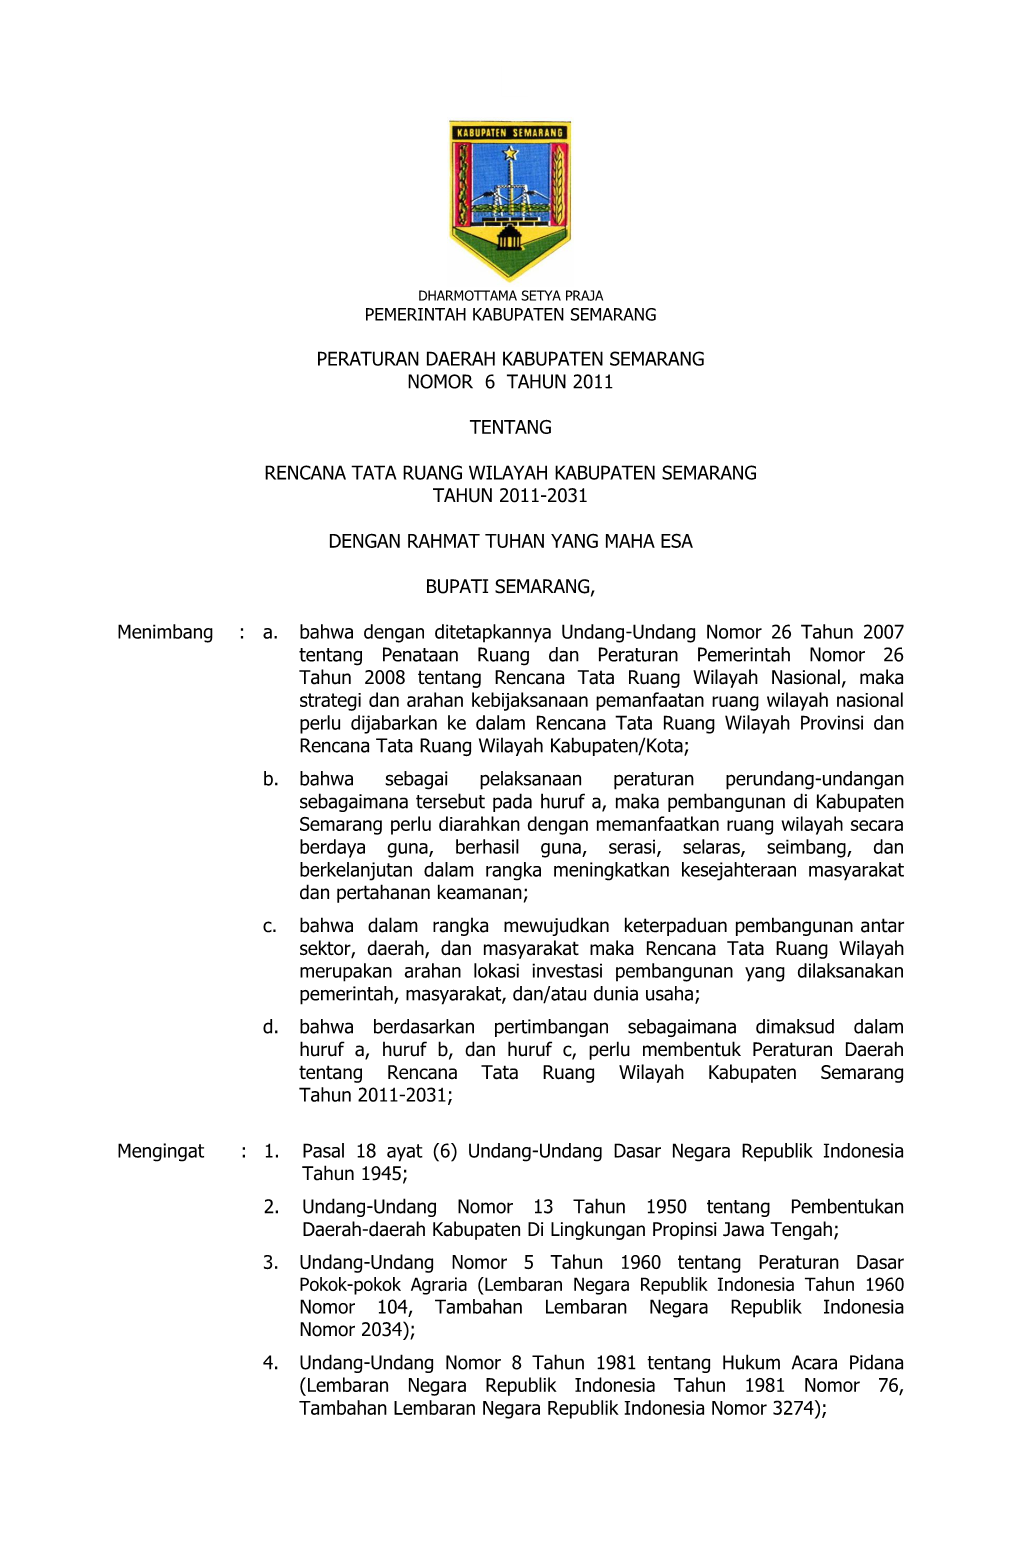 Peraturan Daerah Kabupaten Semarang Nomor 6 Tahun 2011